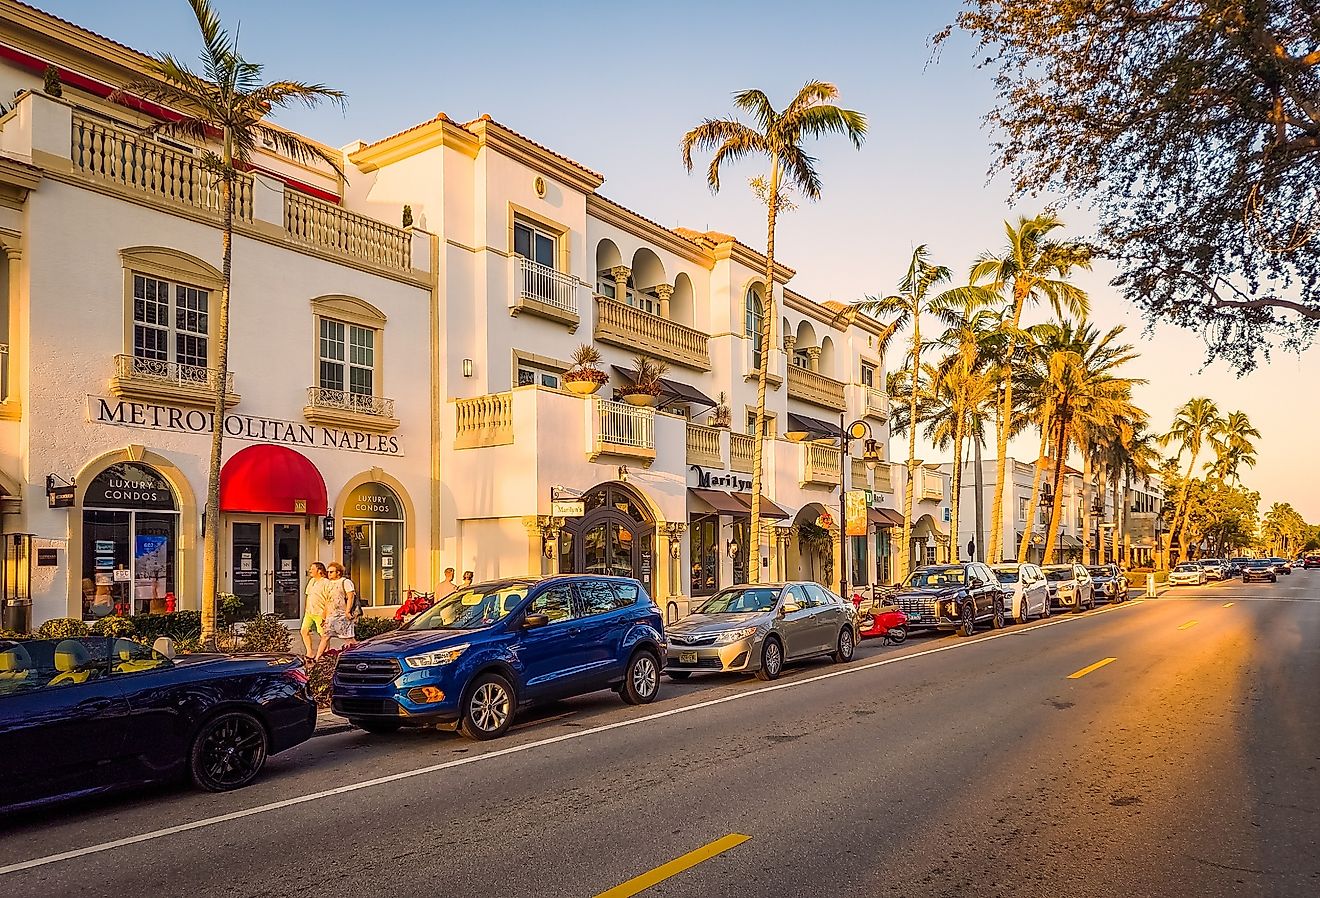 5th avenue at sunset, in Naples, Florida. Image credit Mihai_Andritoiu via Shutterstock